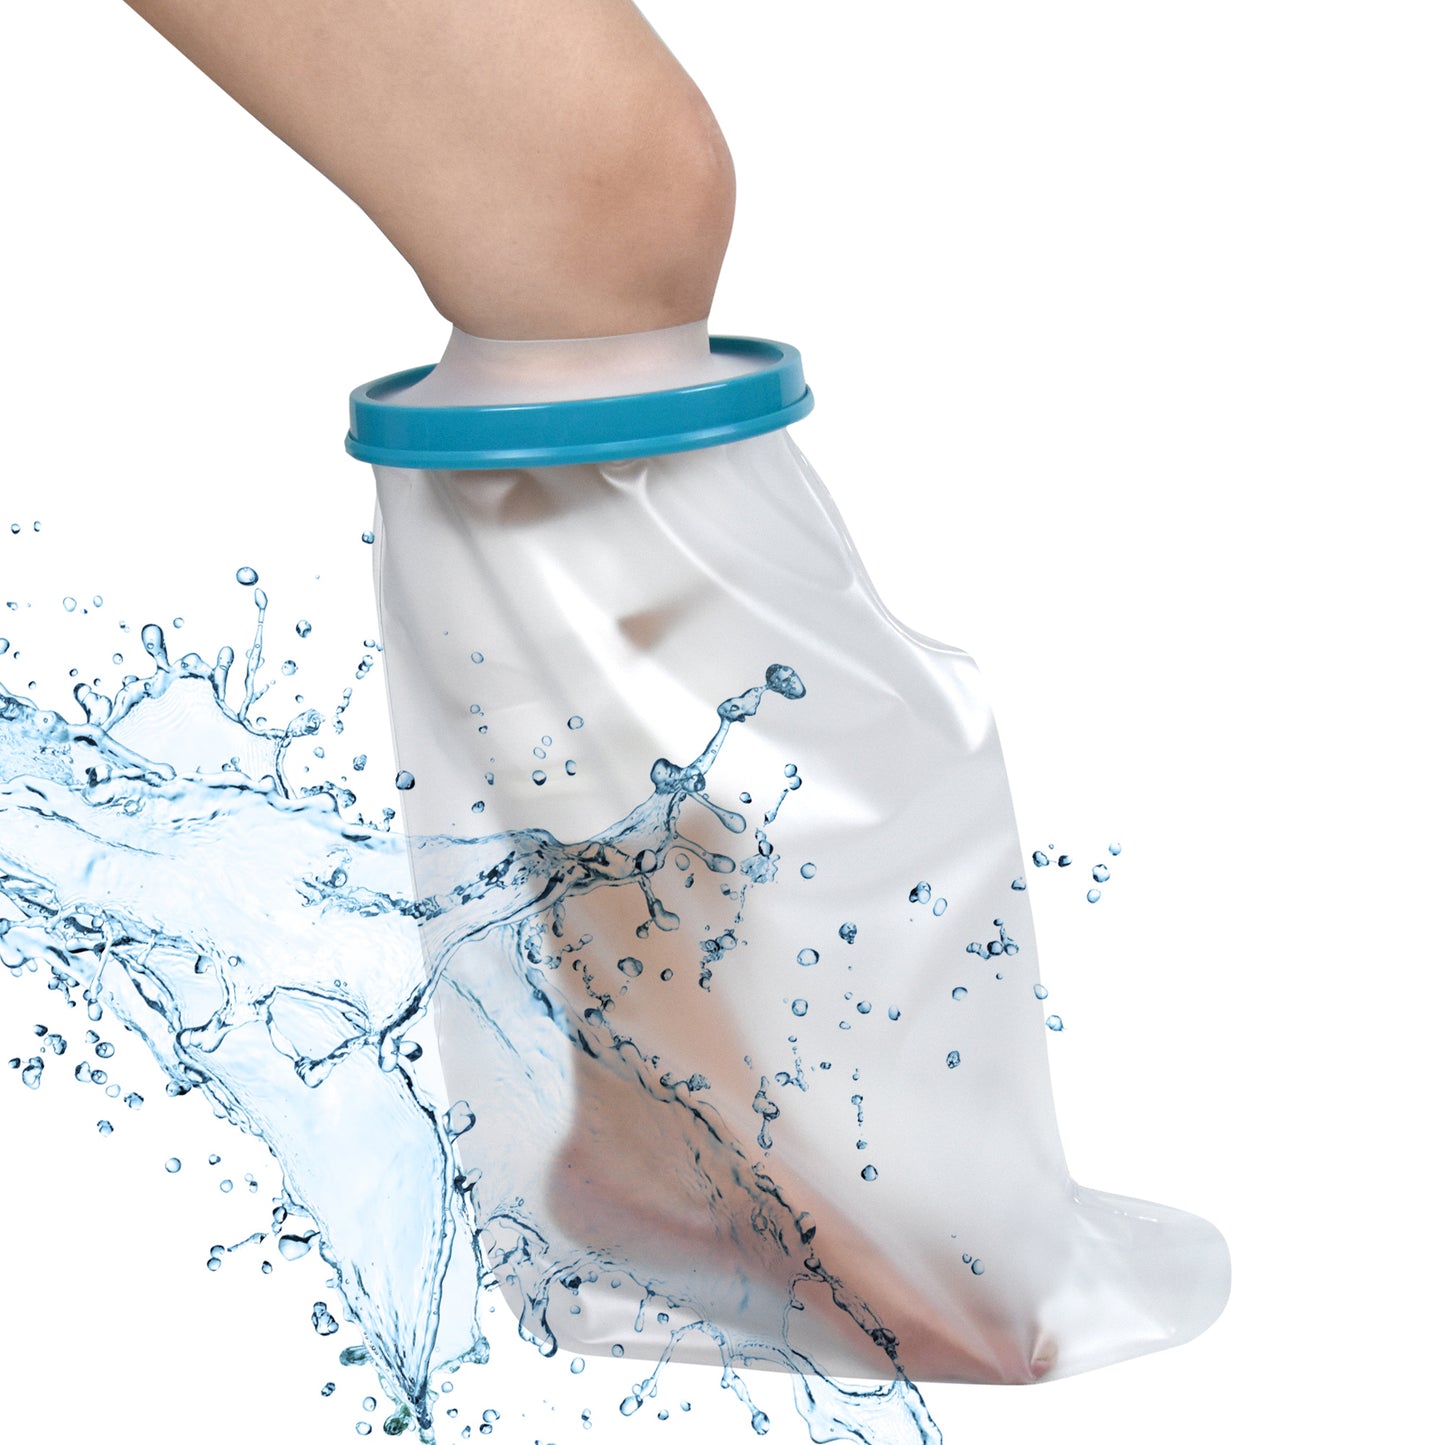 KEKOY Waterproof Leg Cast Cover for Showering